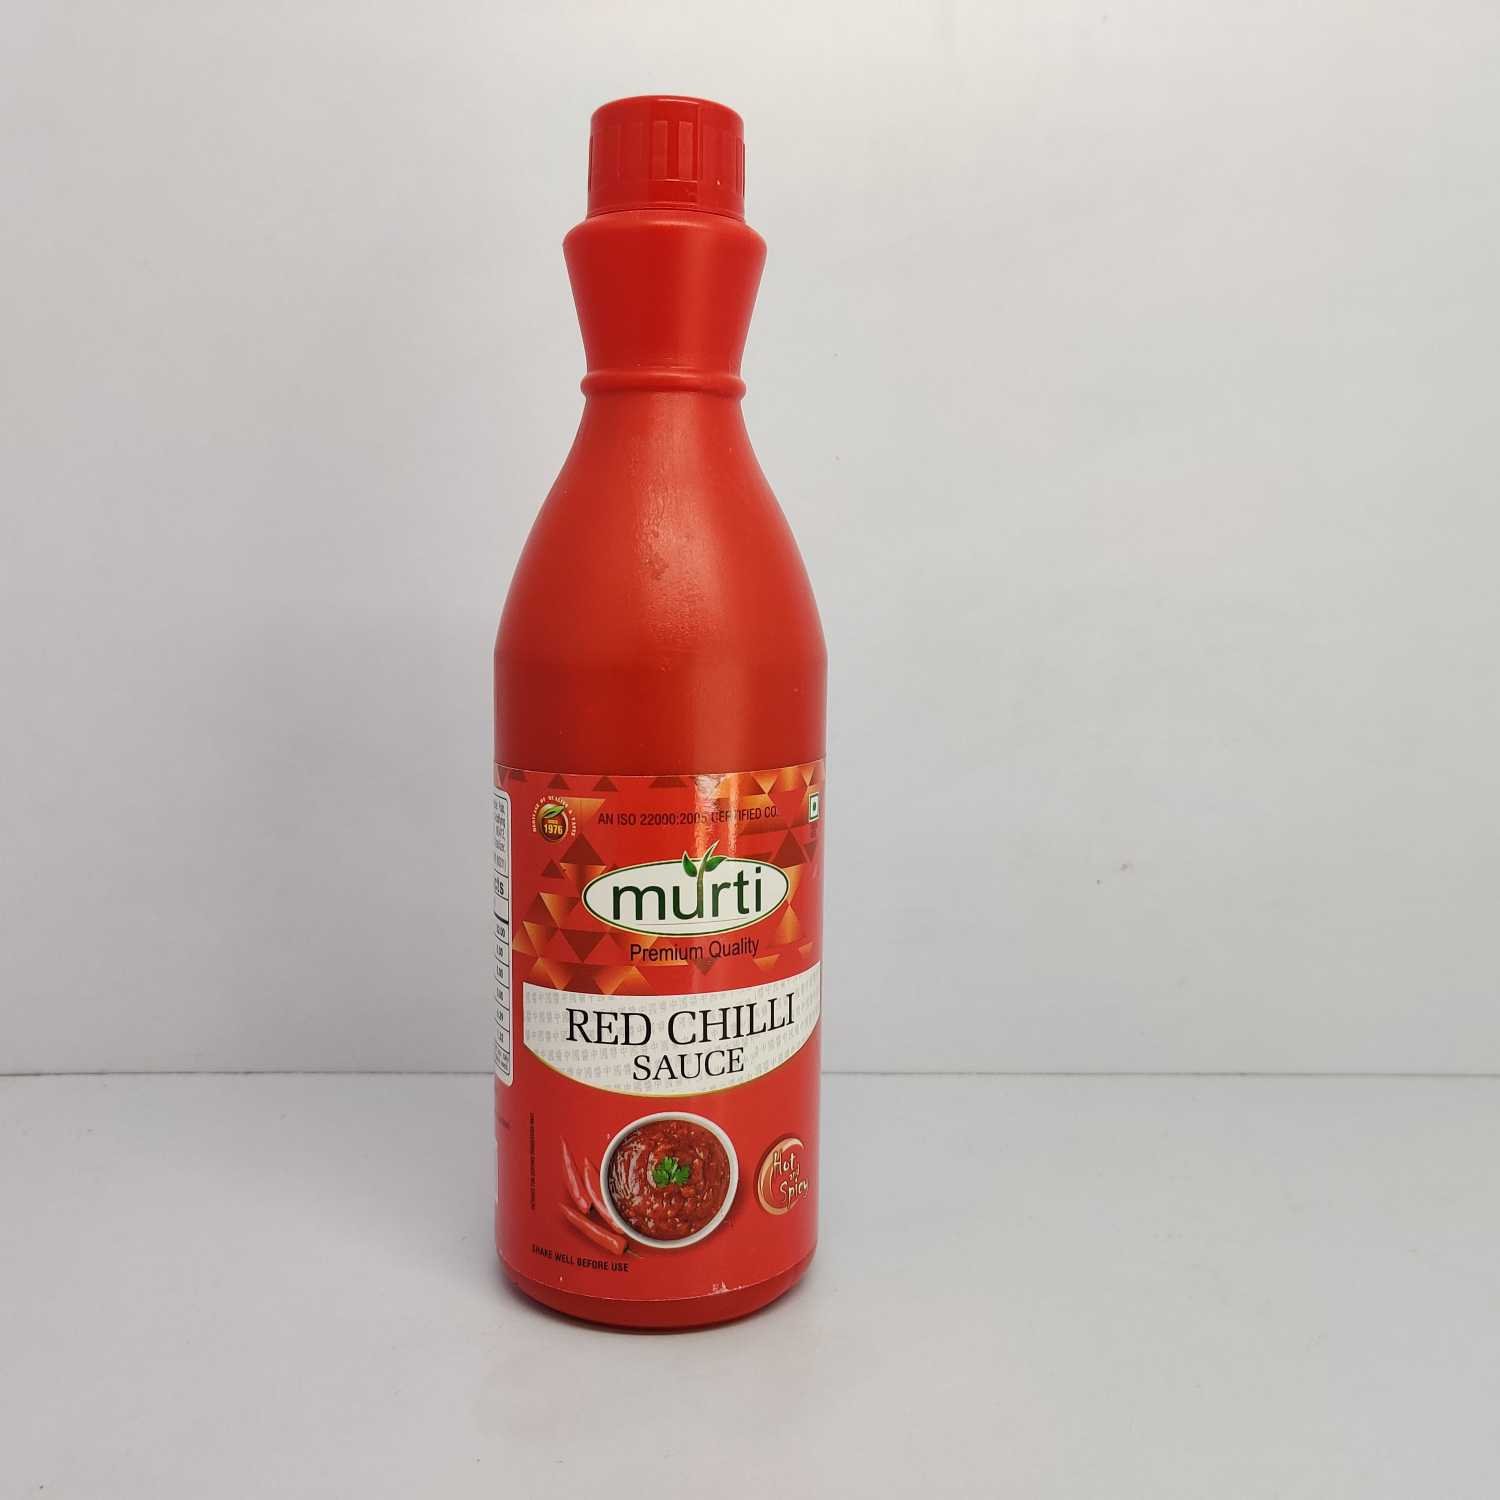 Premium quality red chilli sauce, 650 grams